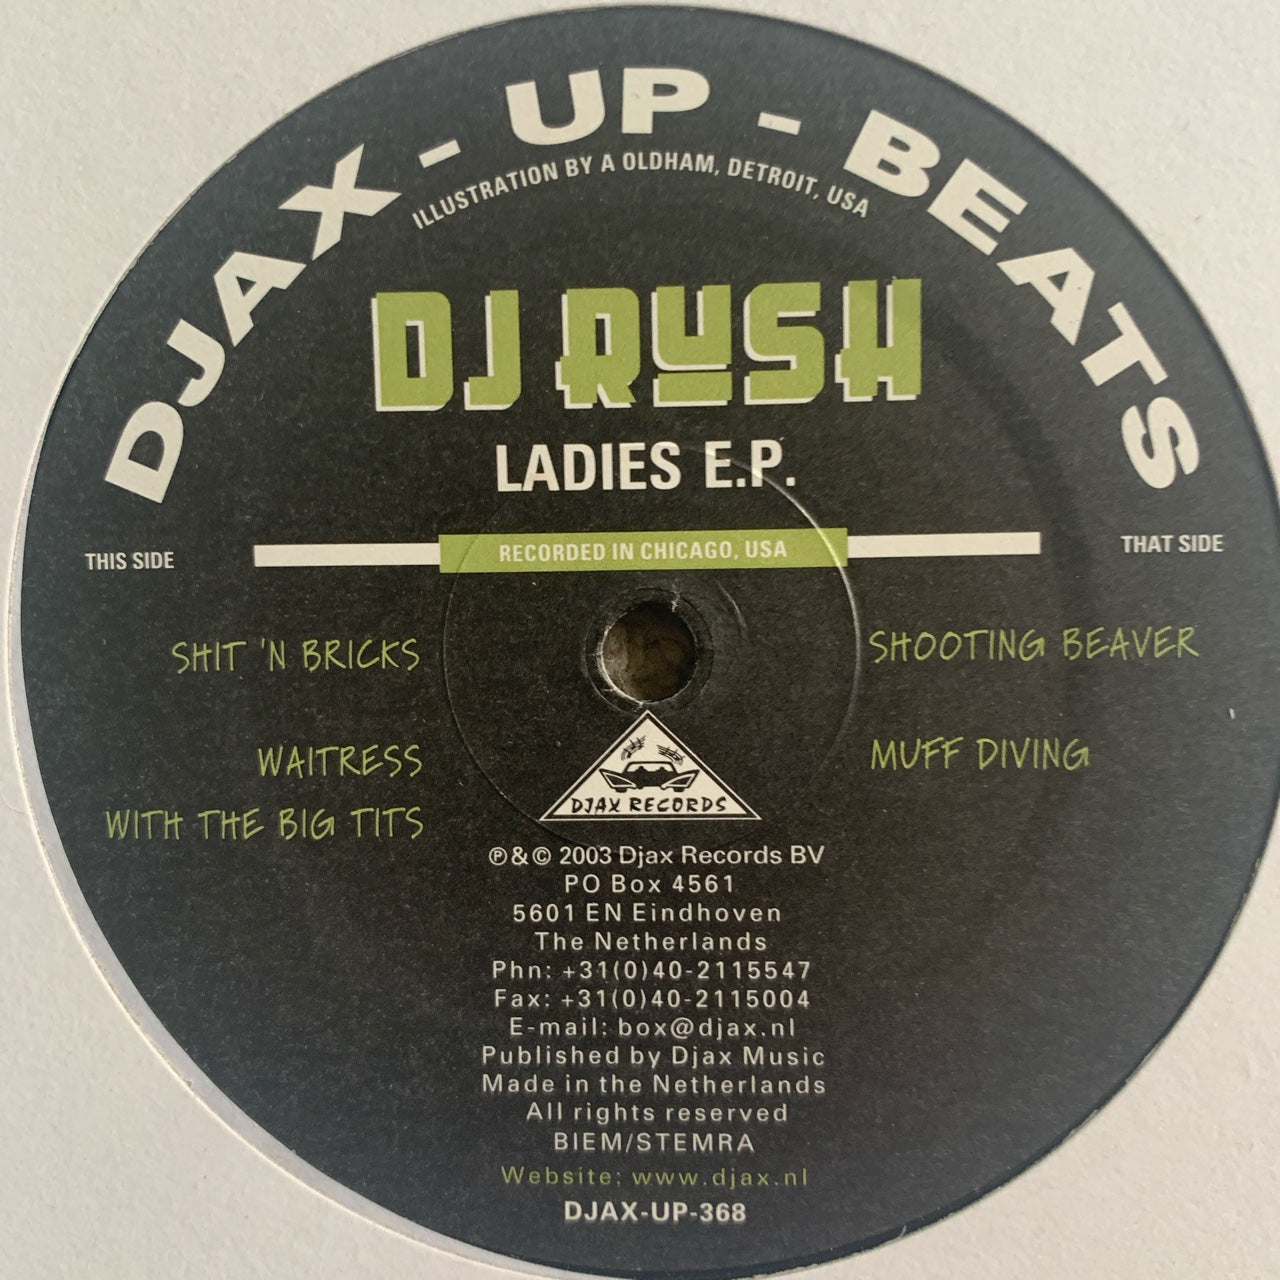 DJ RUSH ‘Ladies EP’